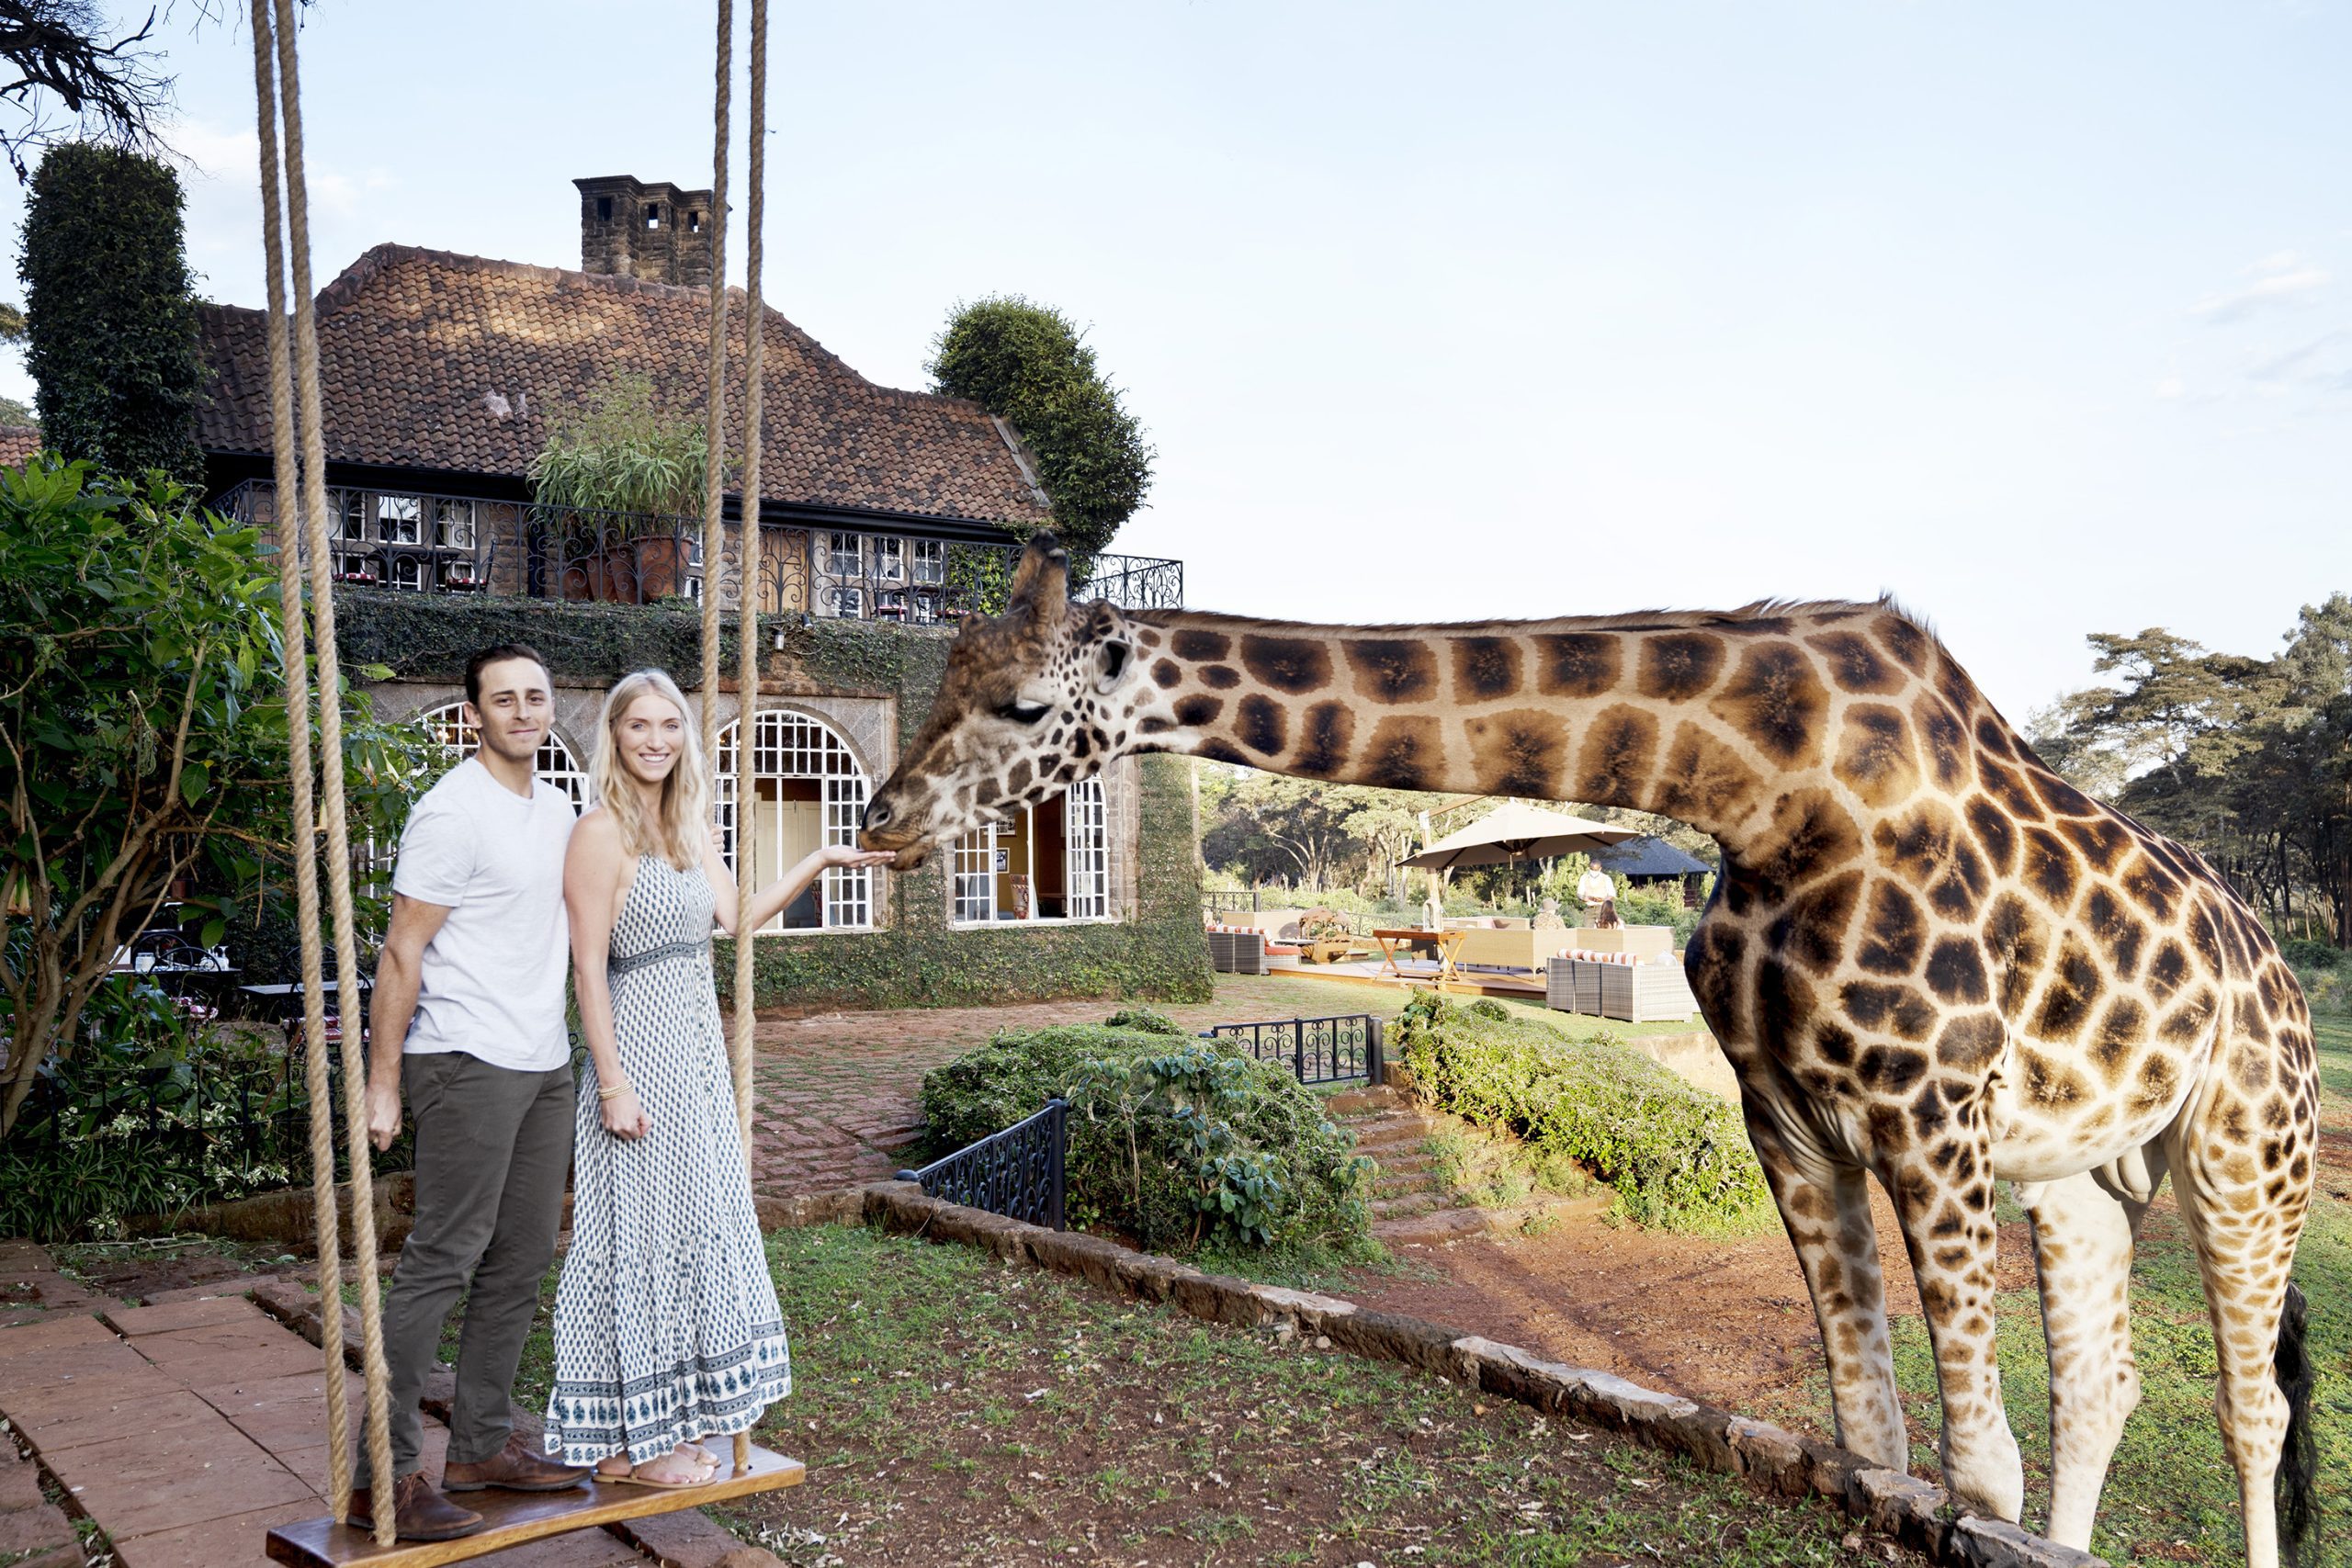 Kyle and Leah feeding a giraffe at Giraffe Manor